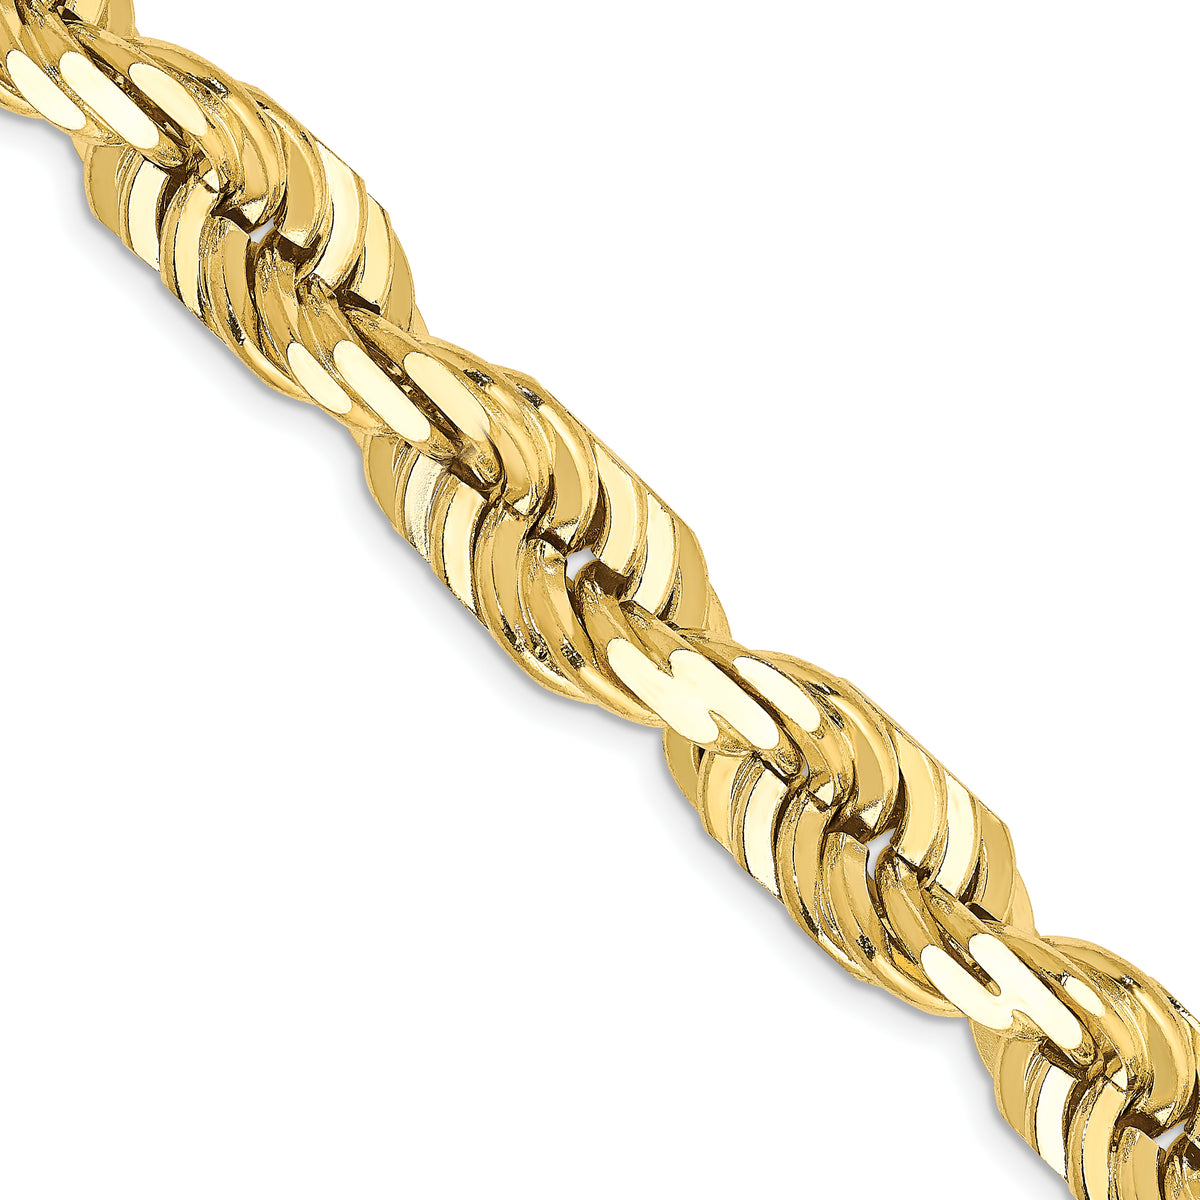 10k 10mm Diamond-cut Rope Chain